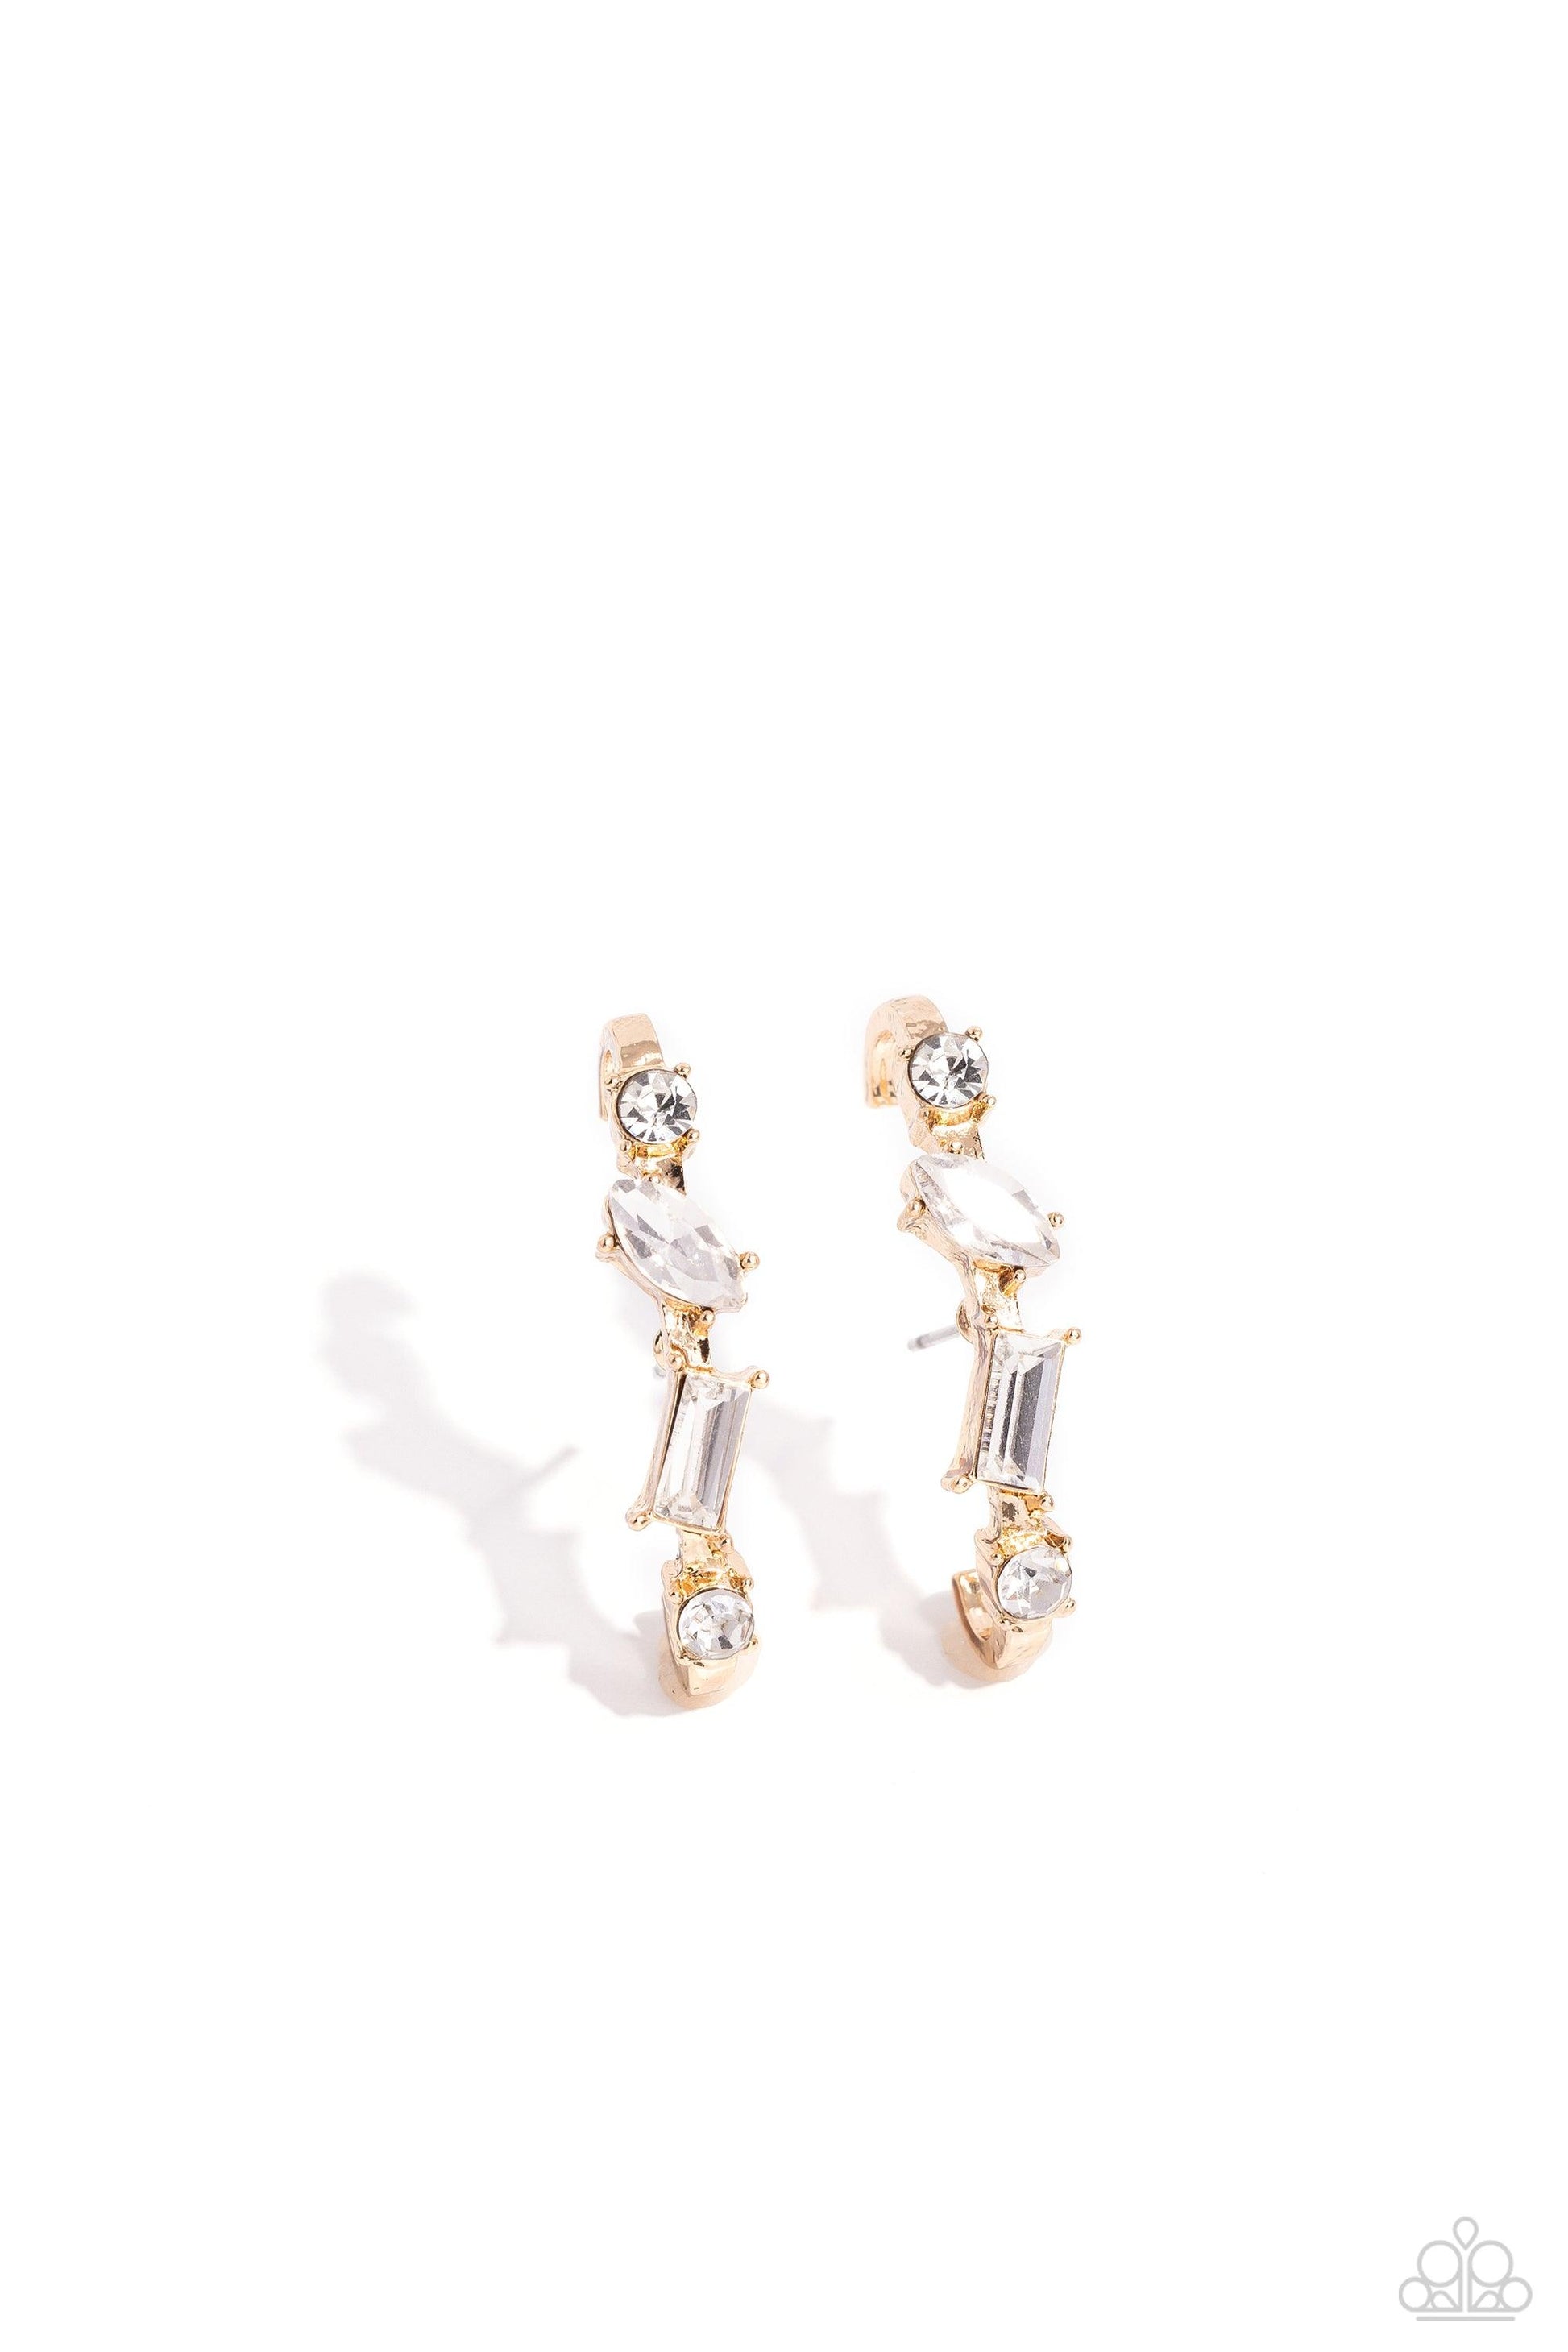 Paparazzi Accessories - Sliding Shimmer - Gold Earrings - Bling by JessieK